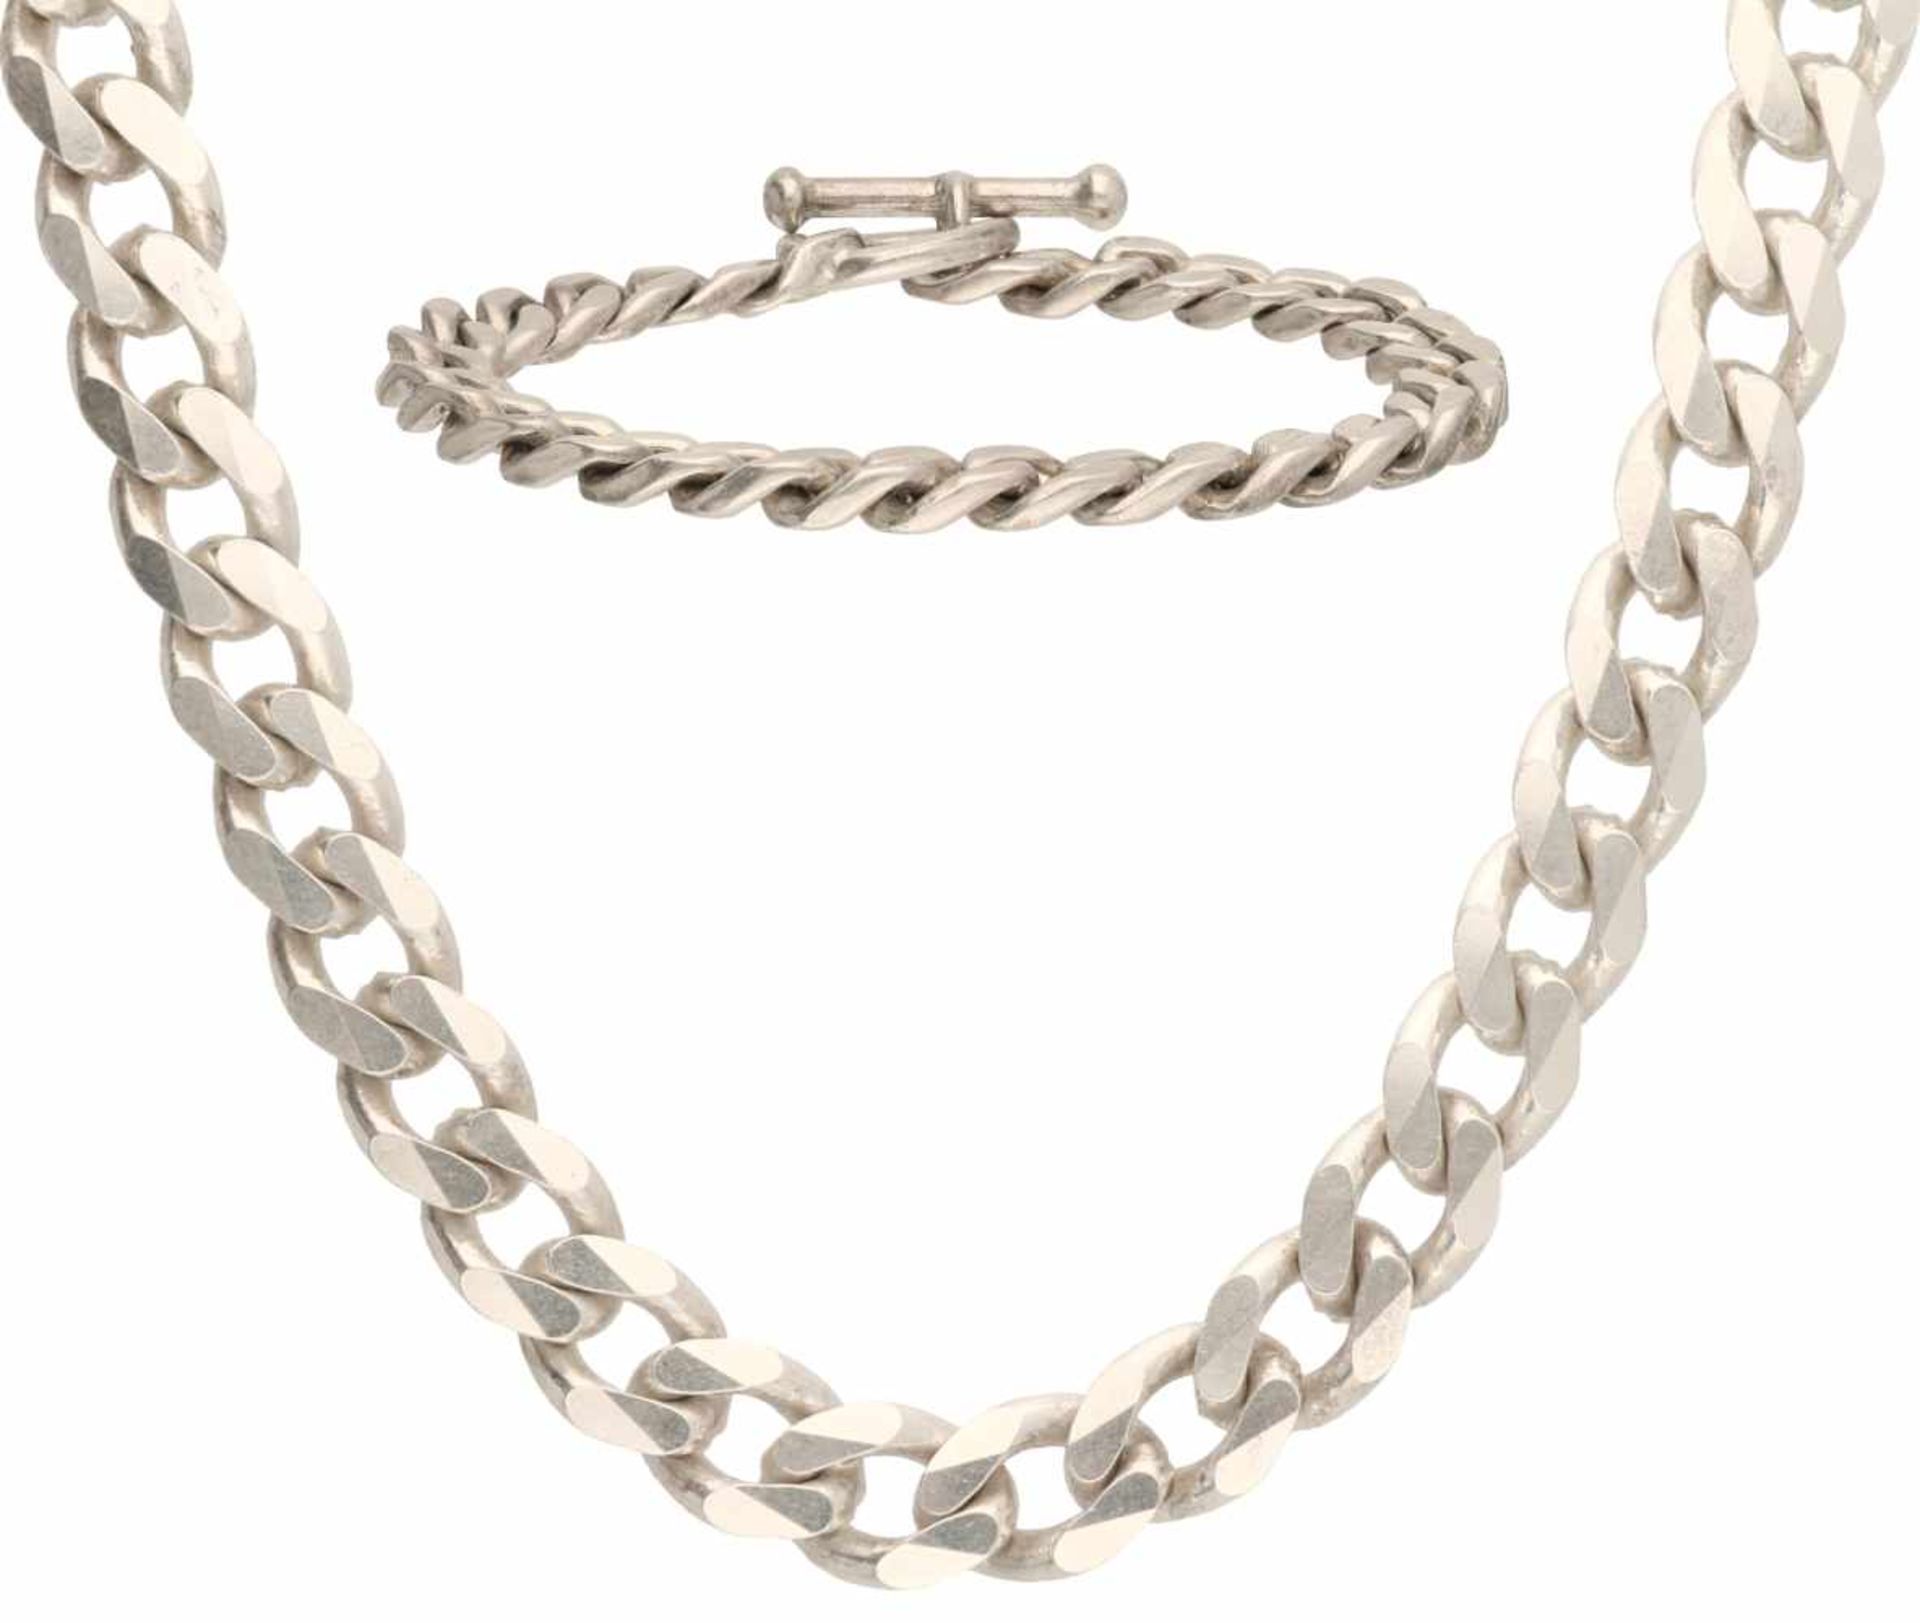 Gourmet link necklace and bracelet silver - 925/1000.